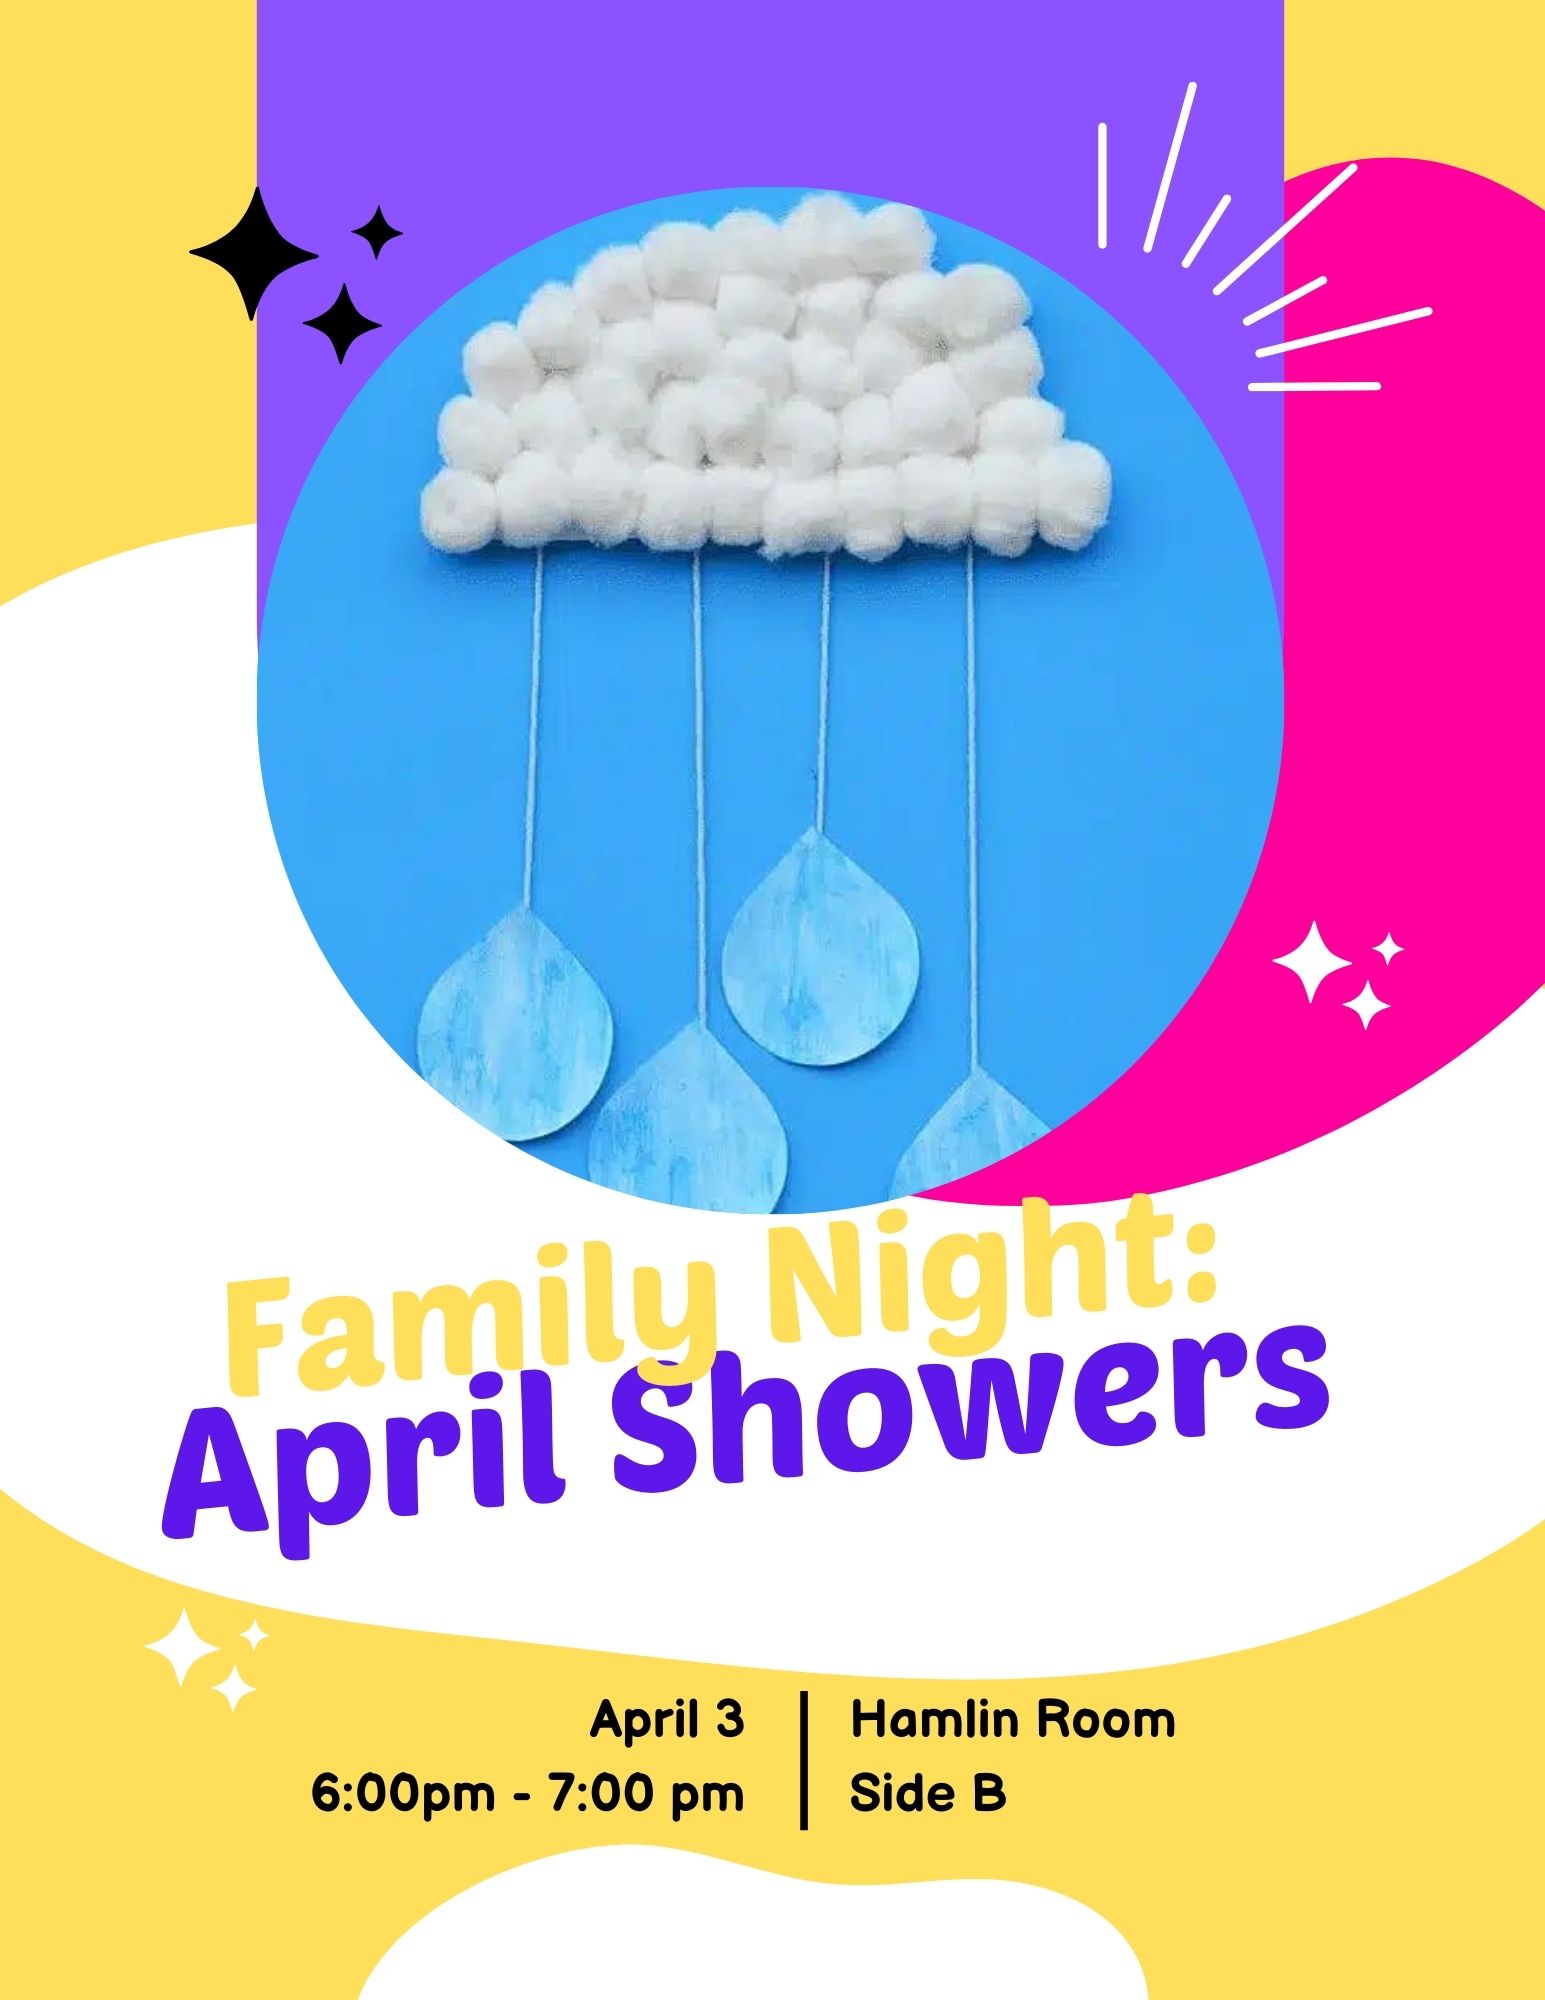 April Showers craft, a rain cloud